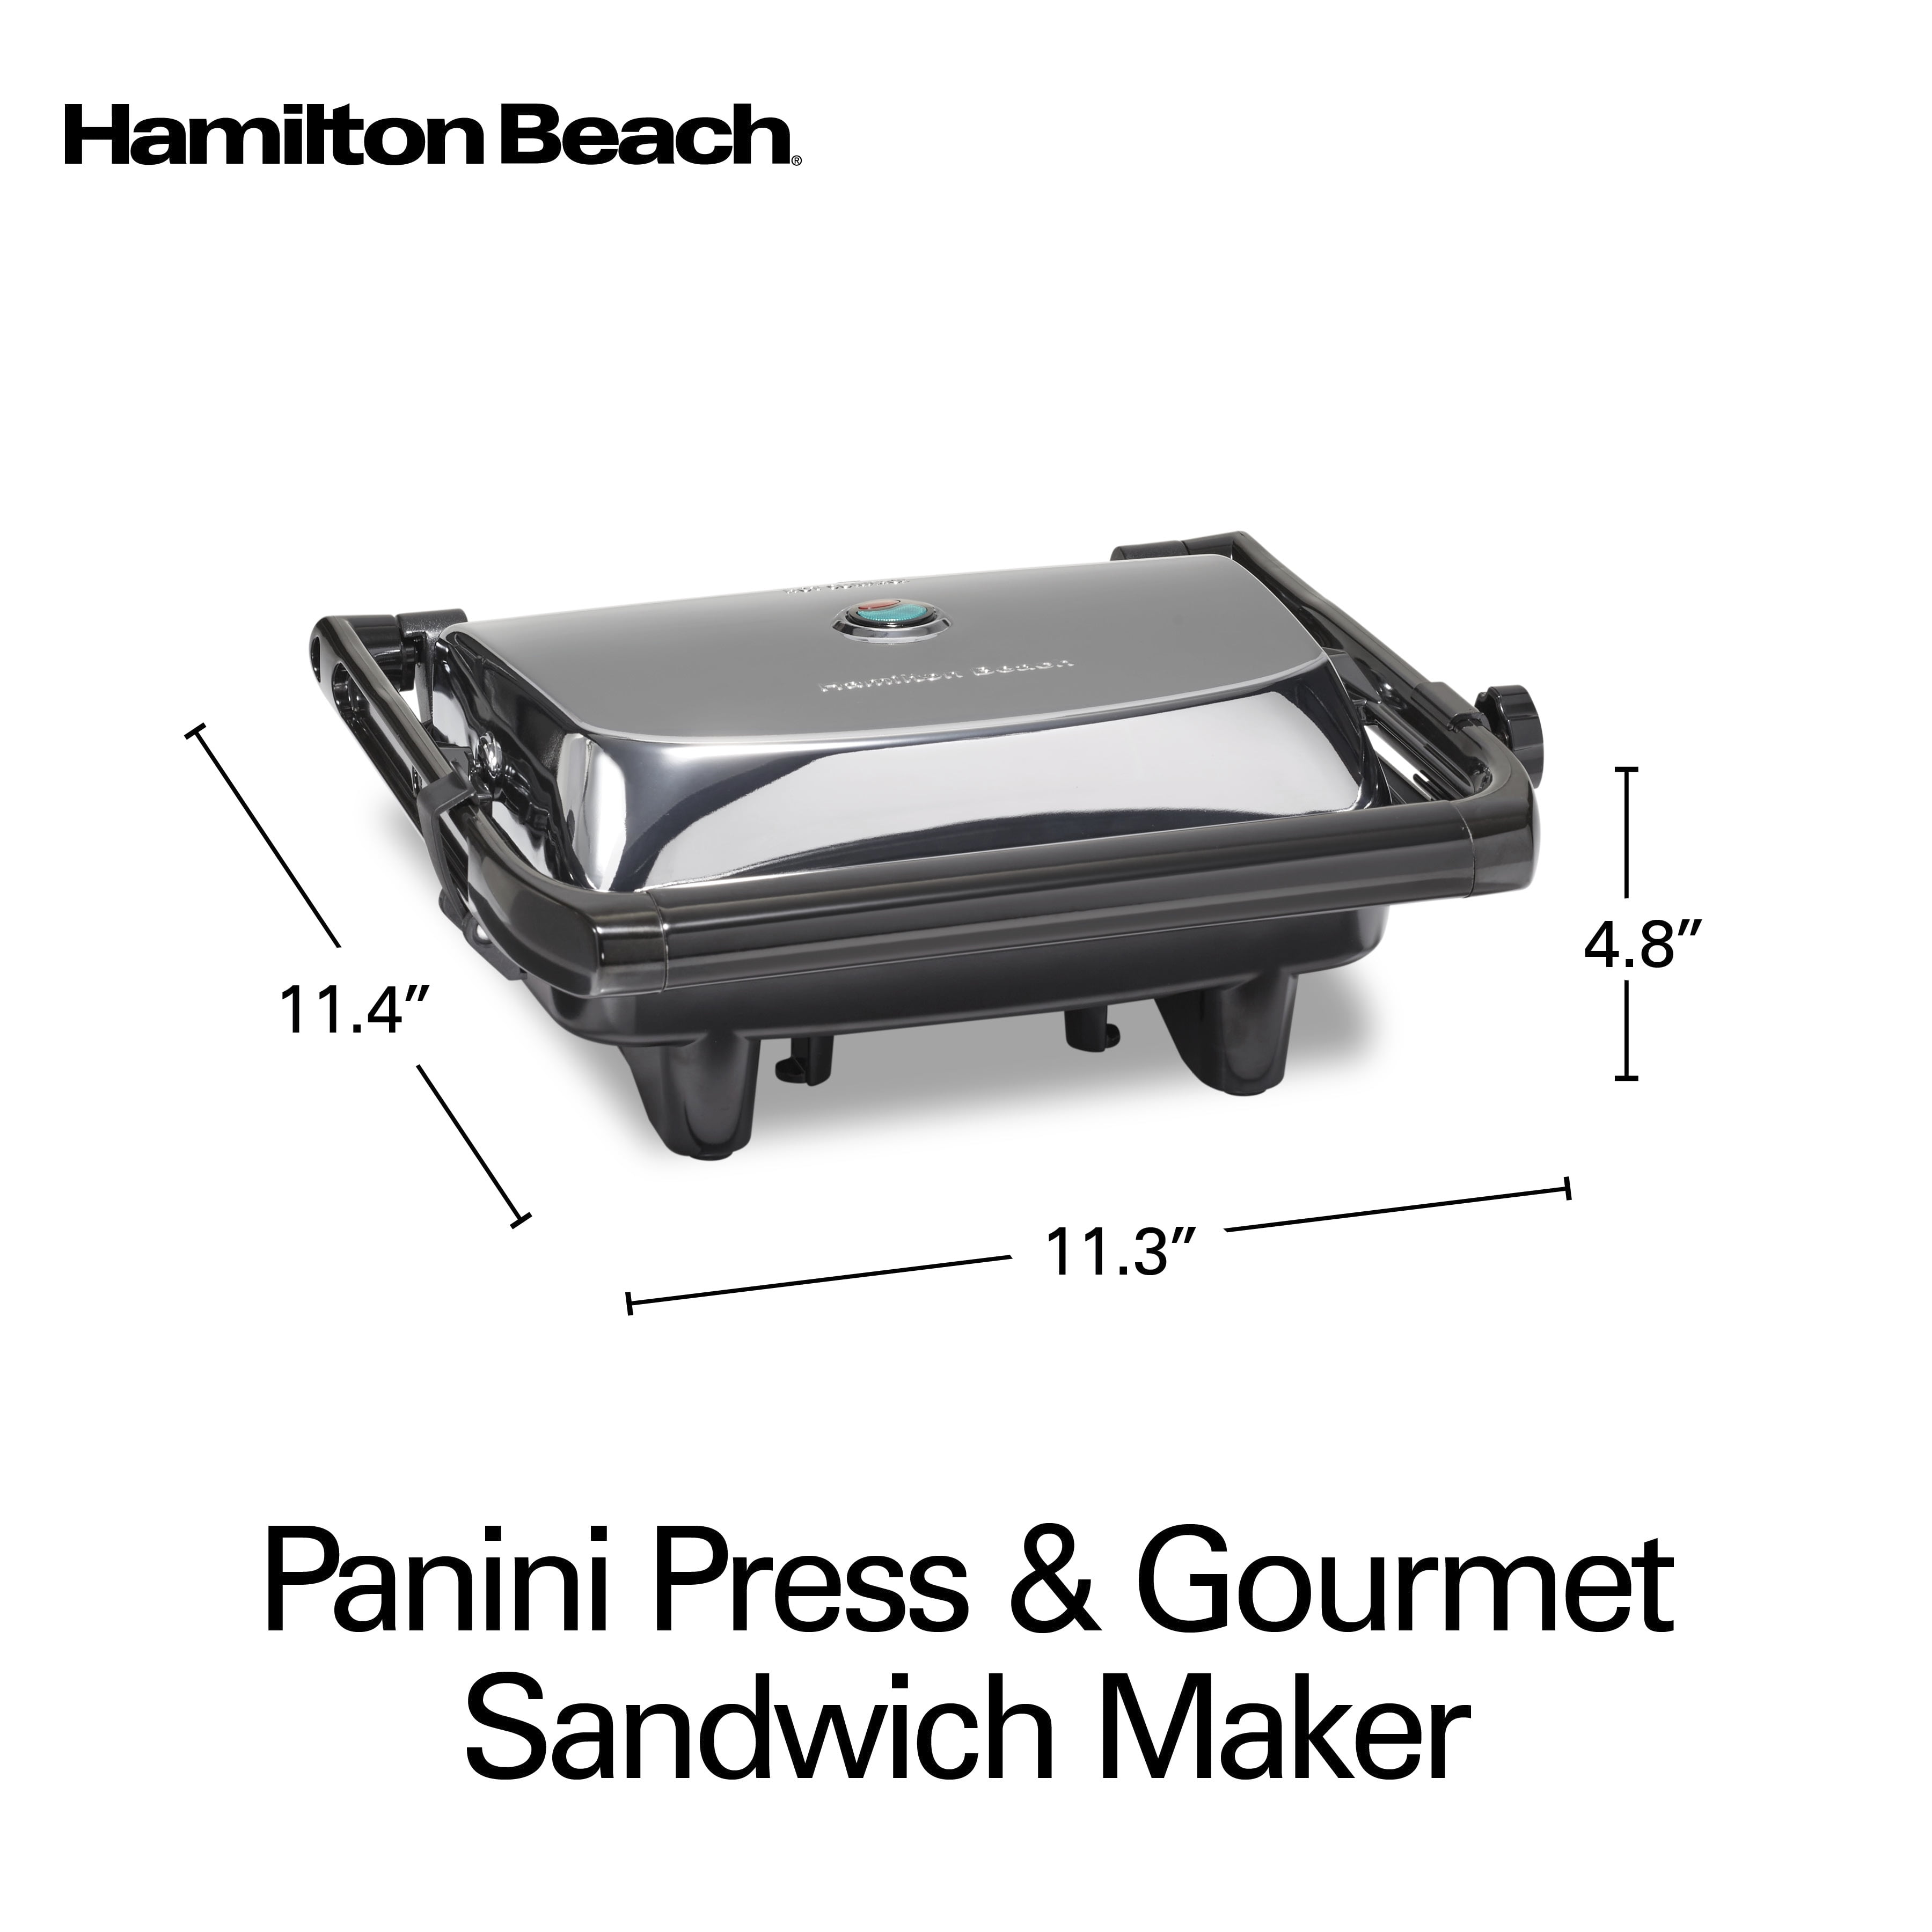 Hamilton Beach Panini Press Gourmet Sandwich Maker